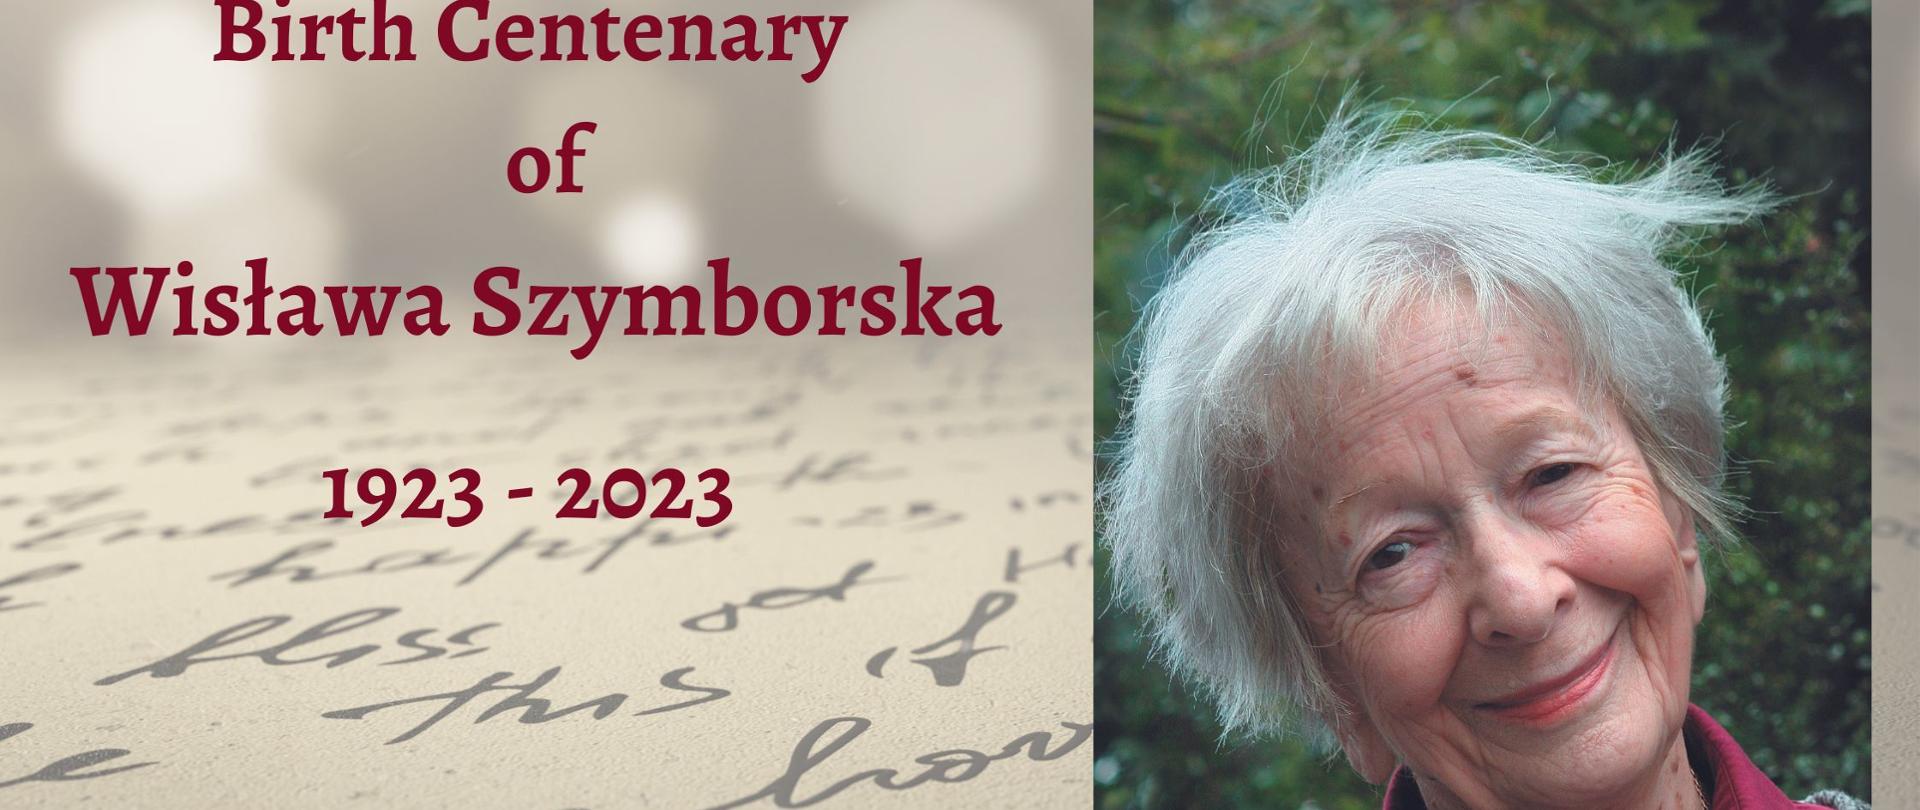 Birth Centenary of Wisława Szymborska - Poland in Malta -  website